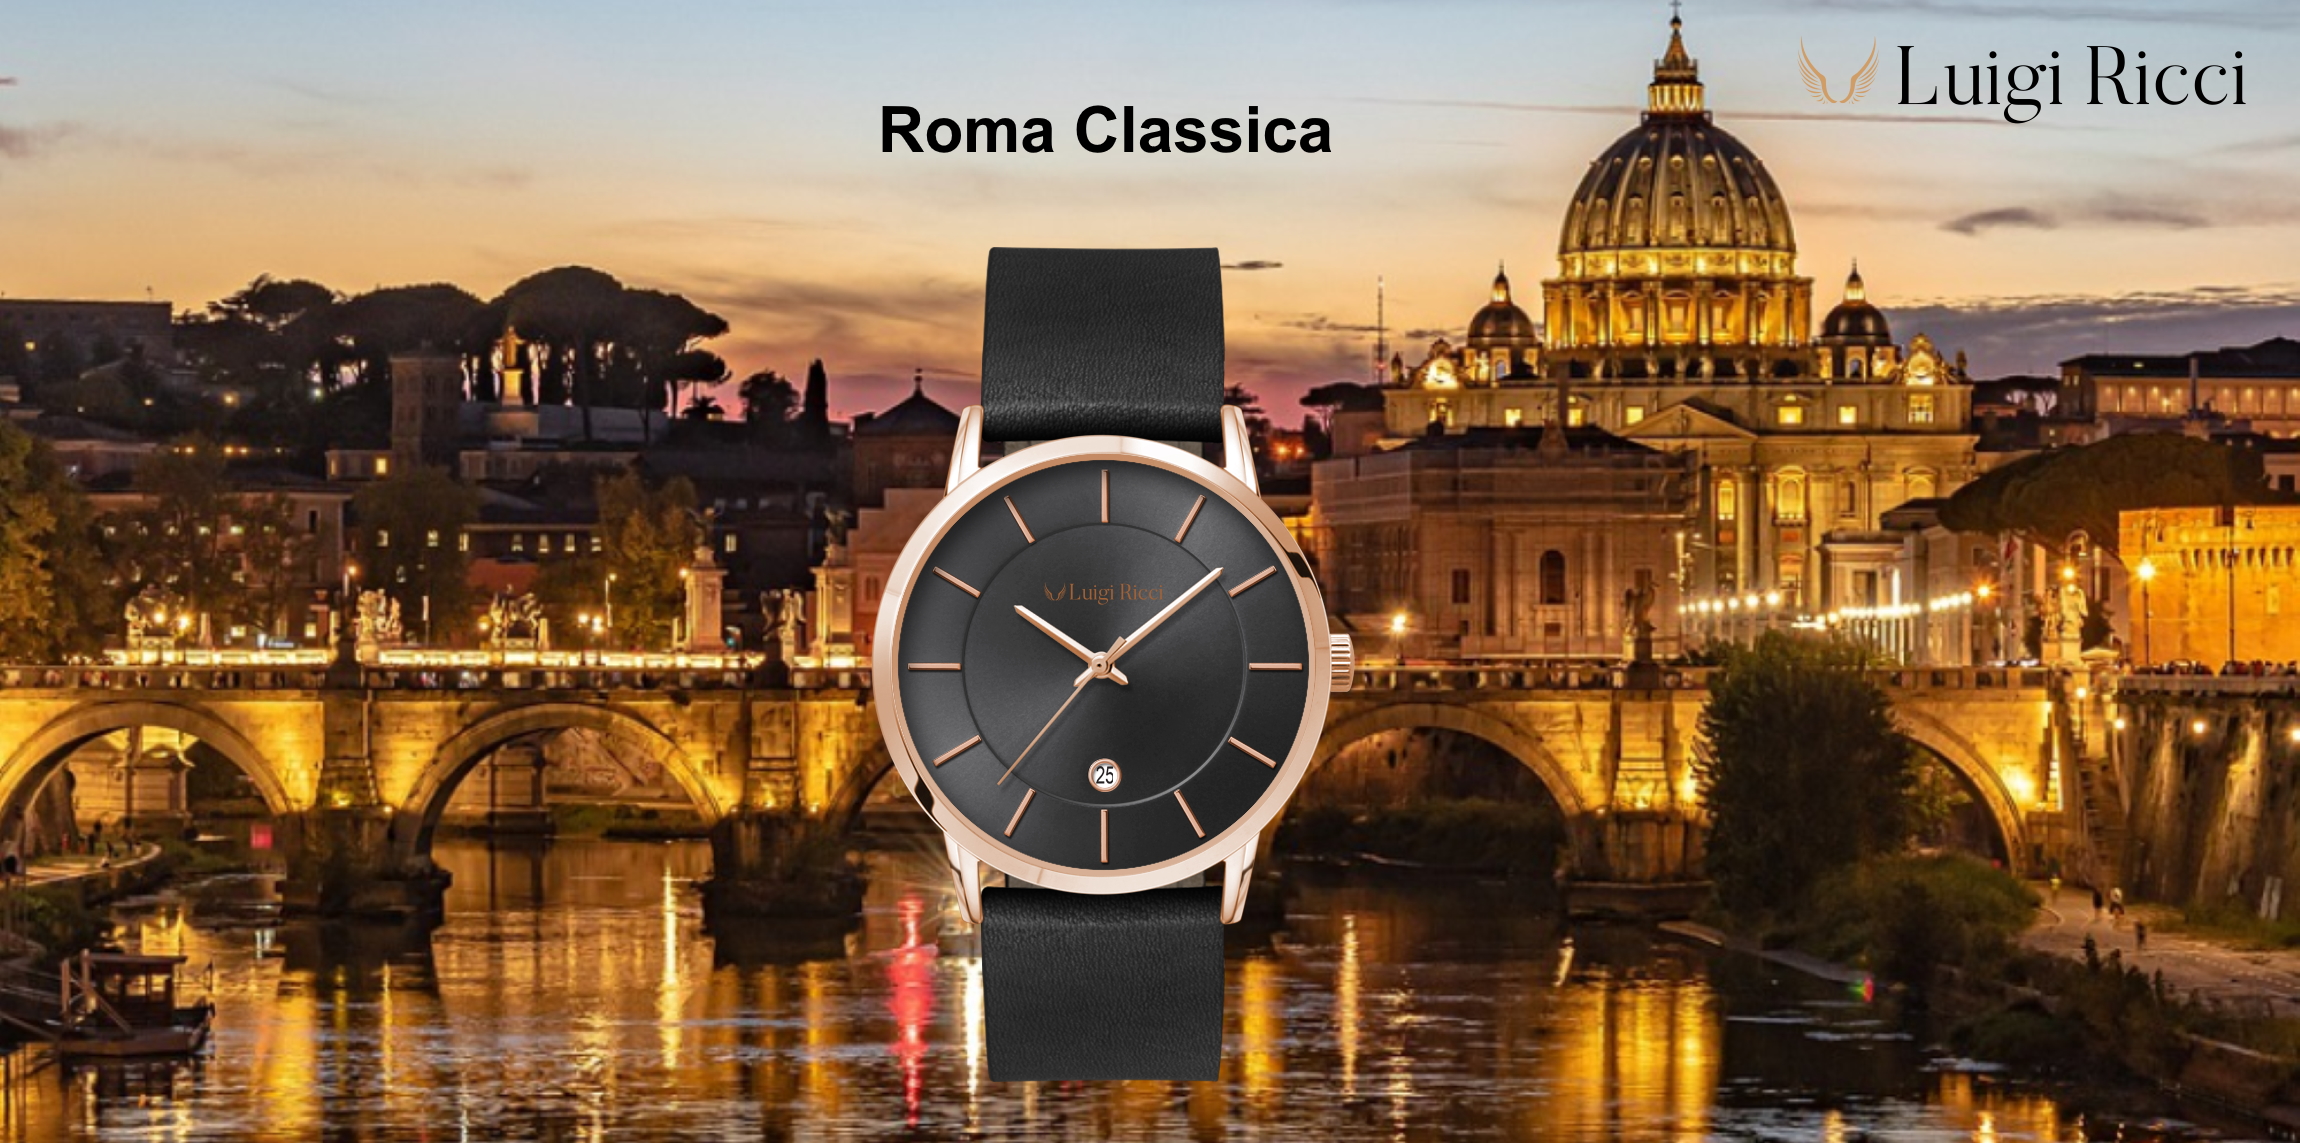 Luigi Ricci Roma Classica - Black unisex wrist watch with leather strap